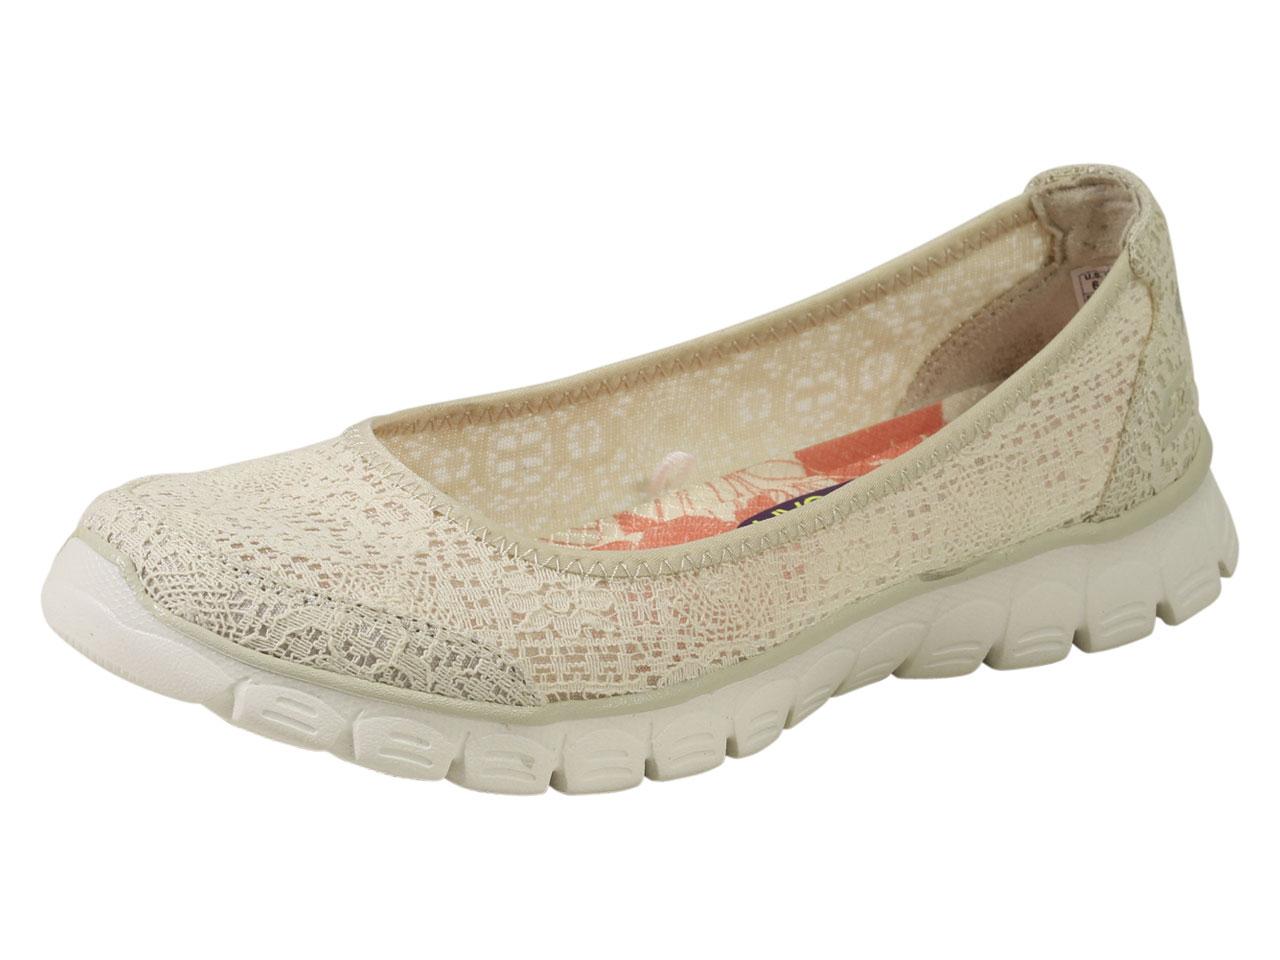 Skechers Women's EZ Flex 3.0 Beautify Memory Foam Loafers Shoes - Natural - 8.5 B(M) US